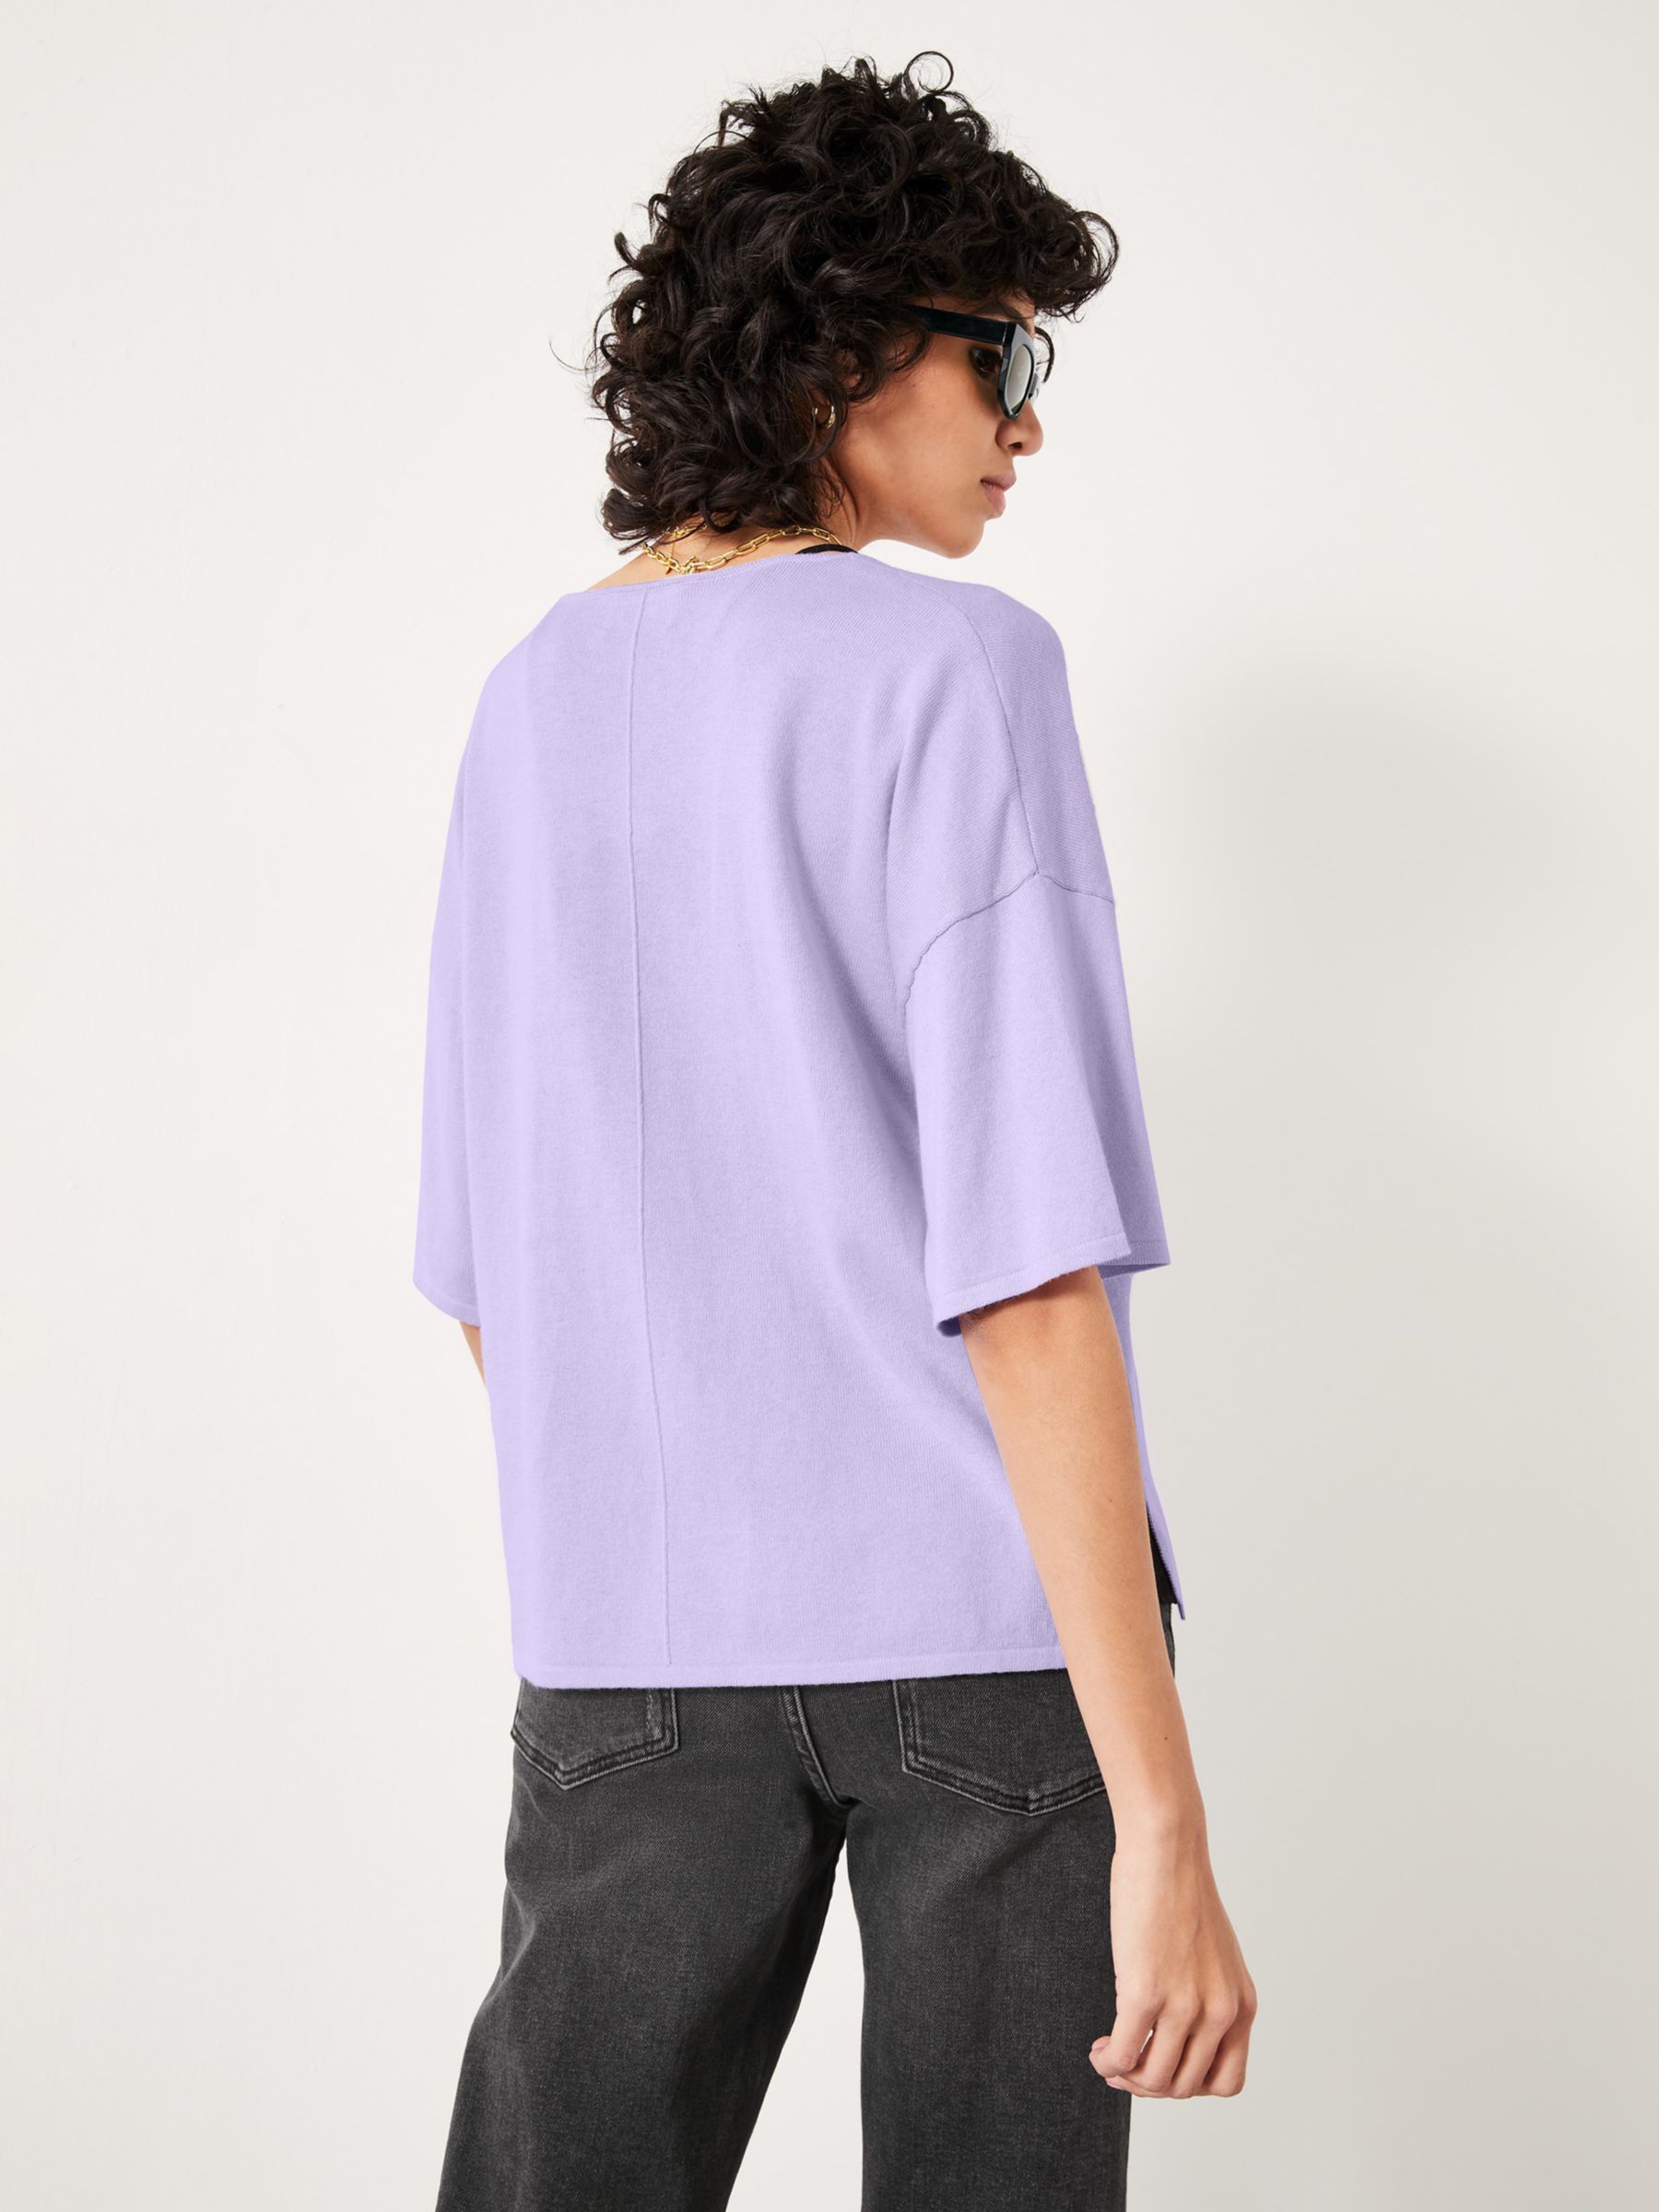 HUSH Cierra V-Neck Knitted Top, Lilac, XS